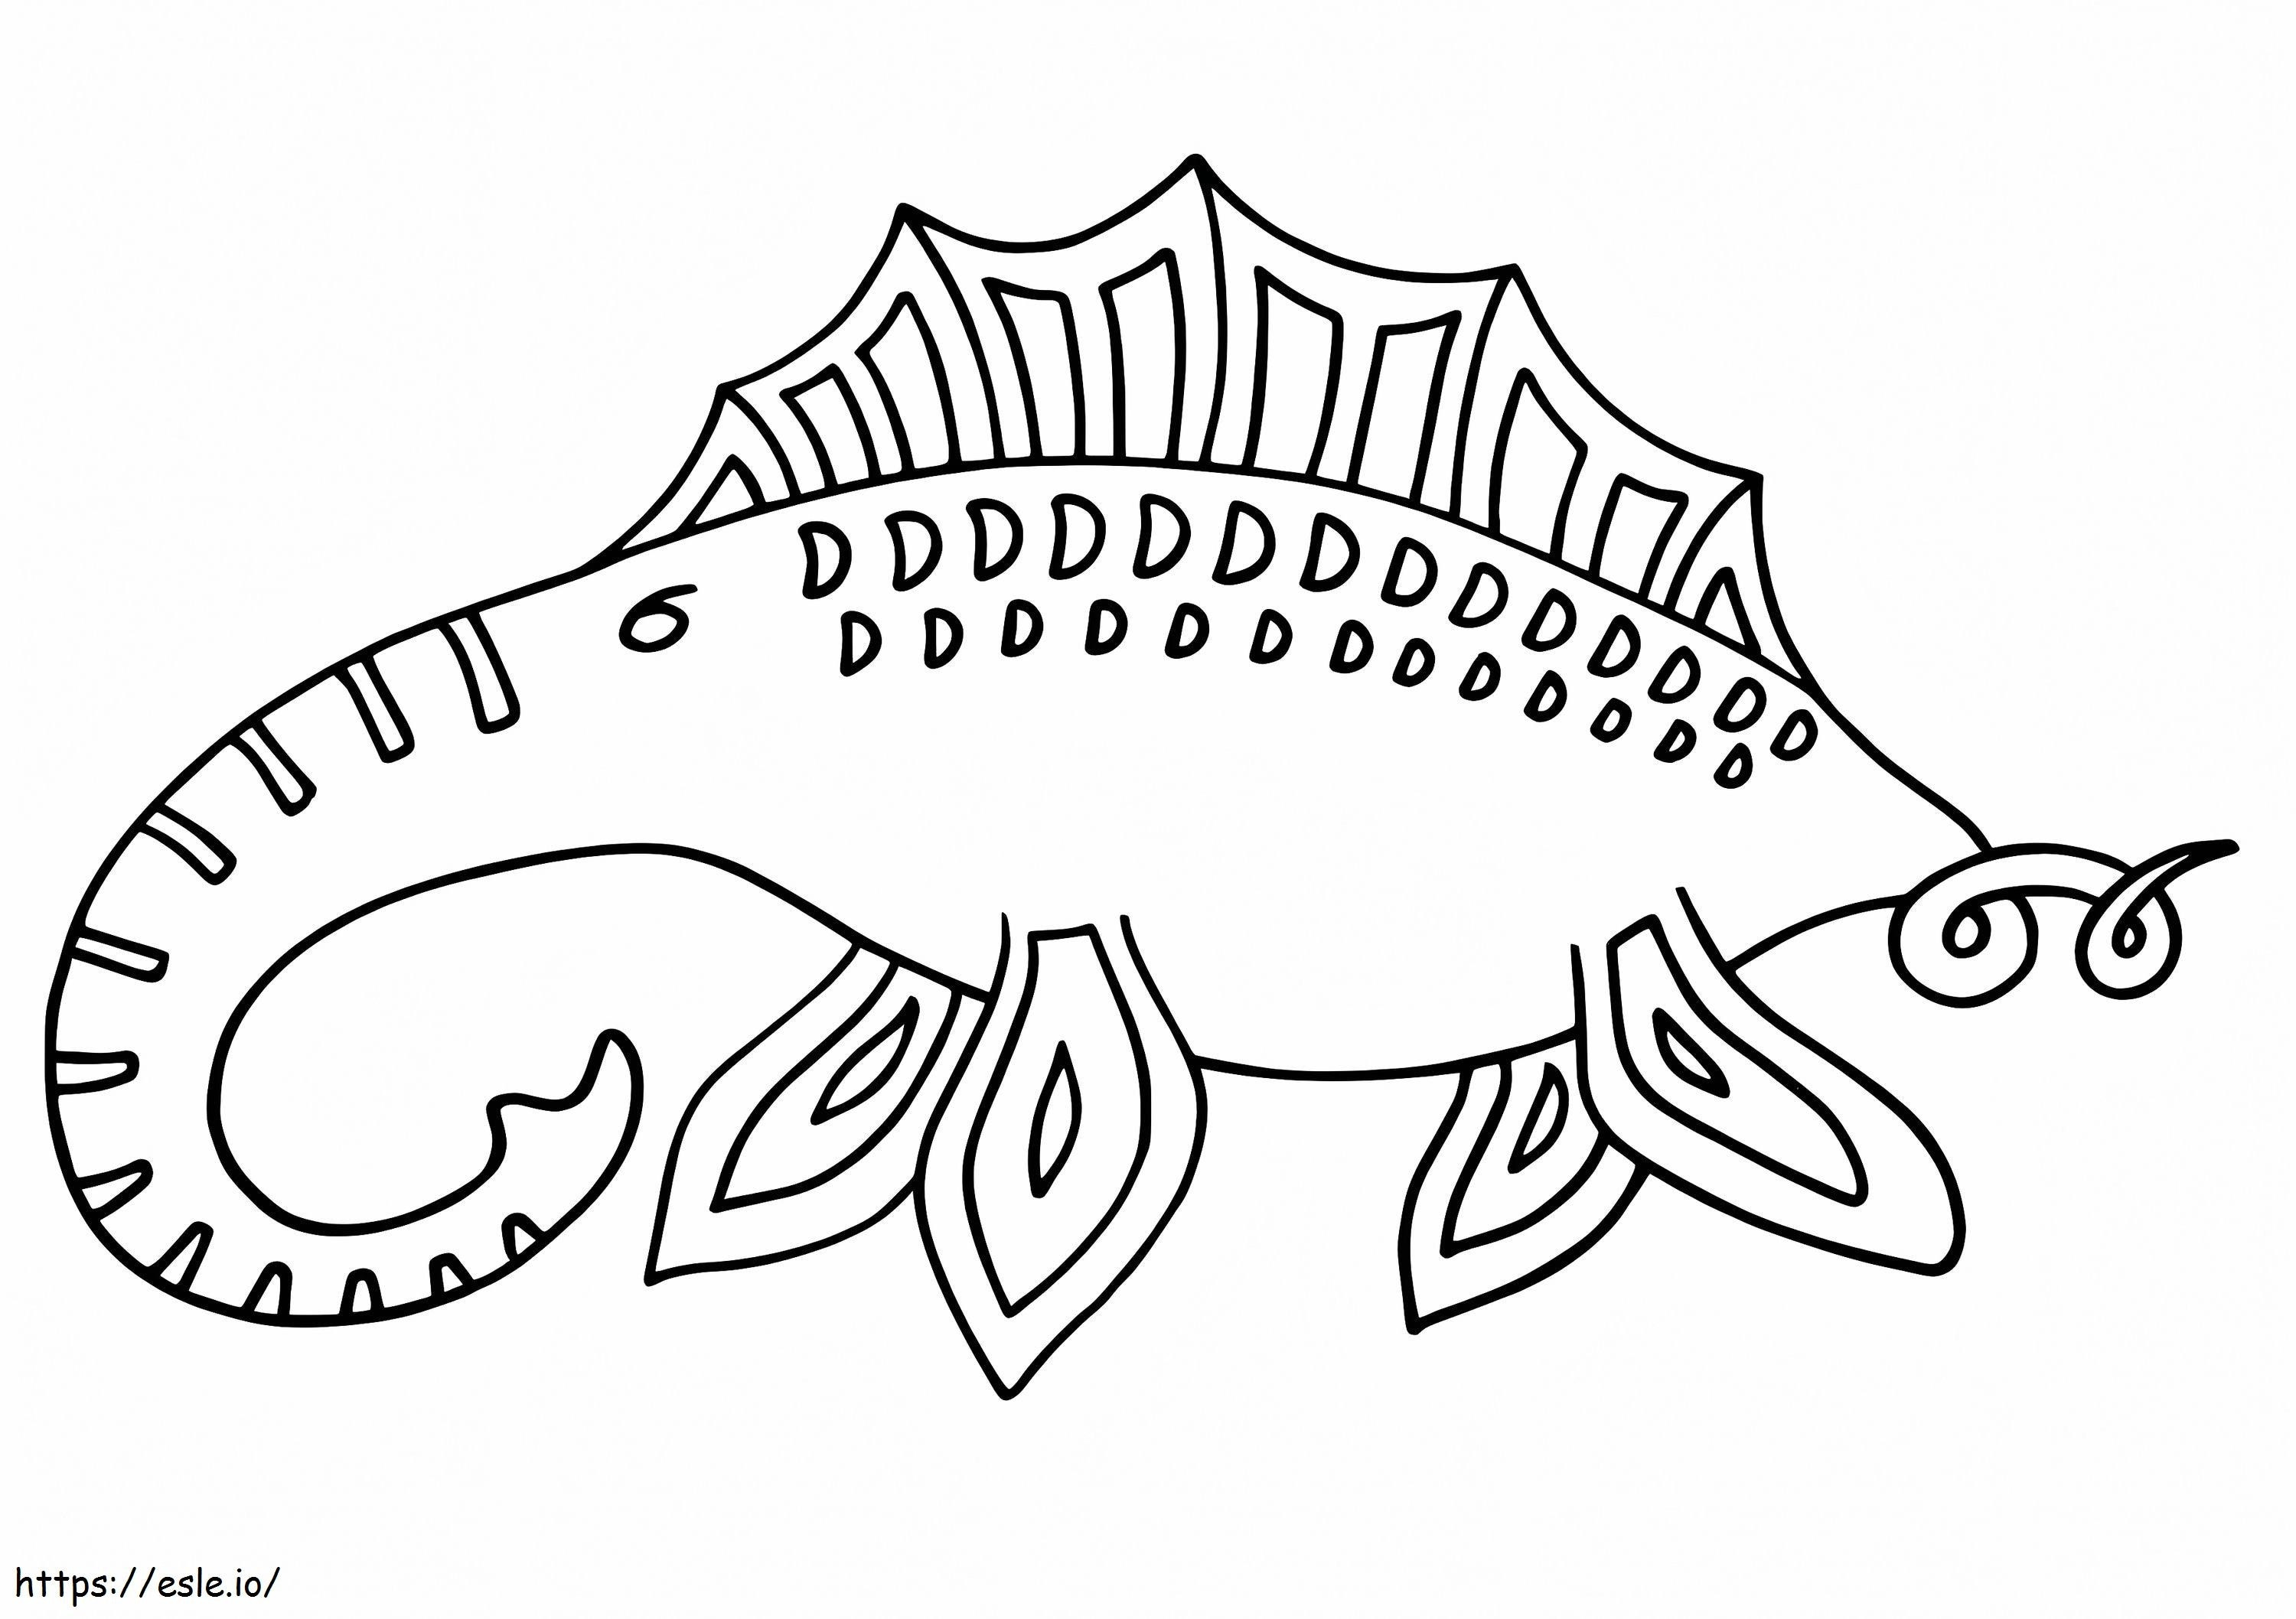 Elephant Seal Alebrijes coloring page